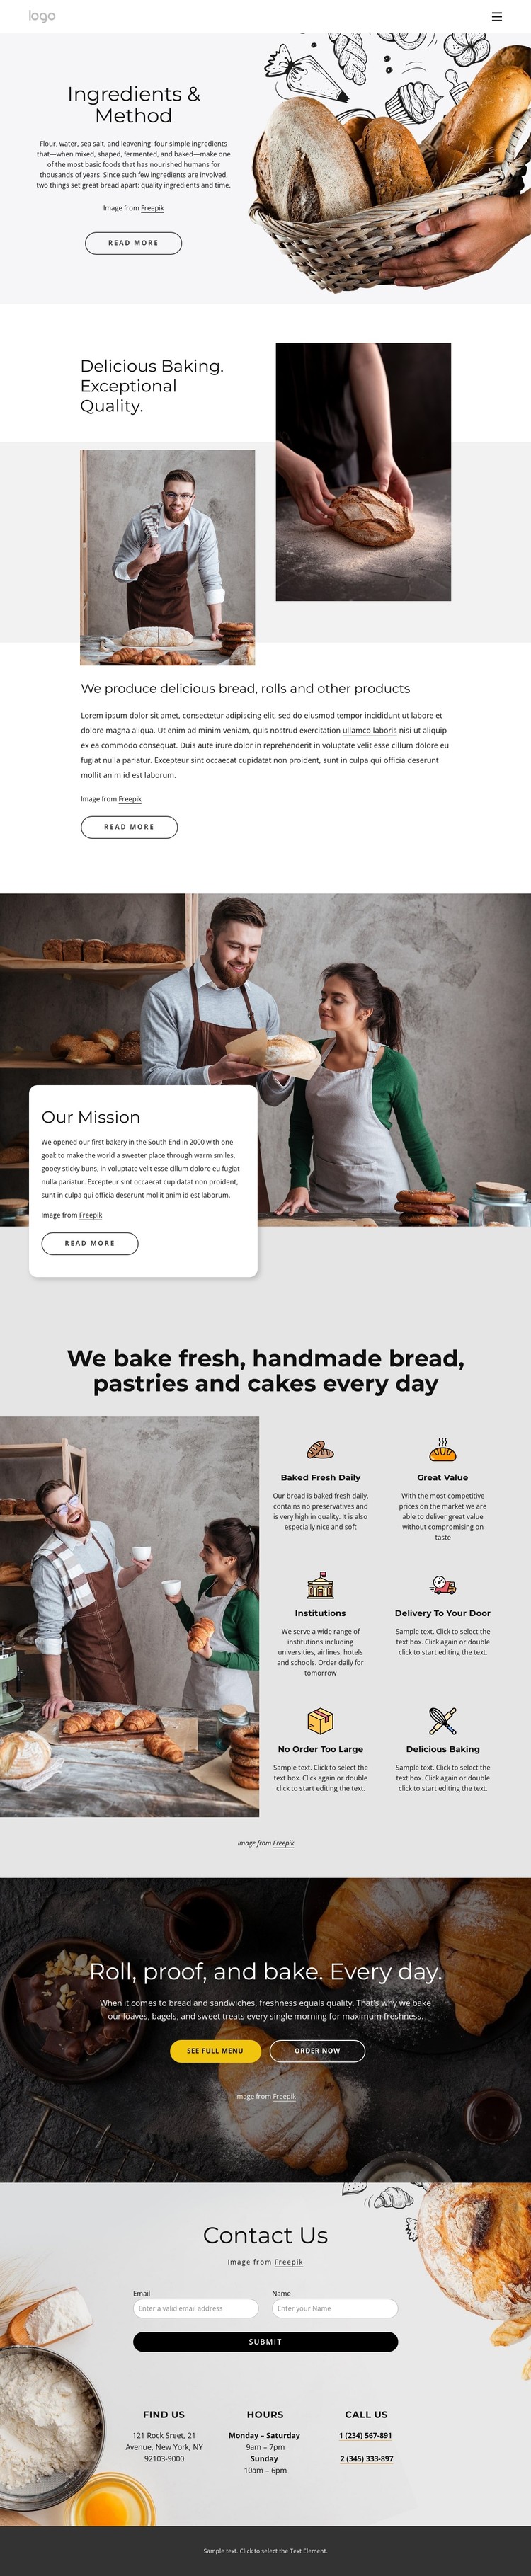 We bake handmade bread CSS Template